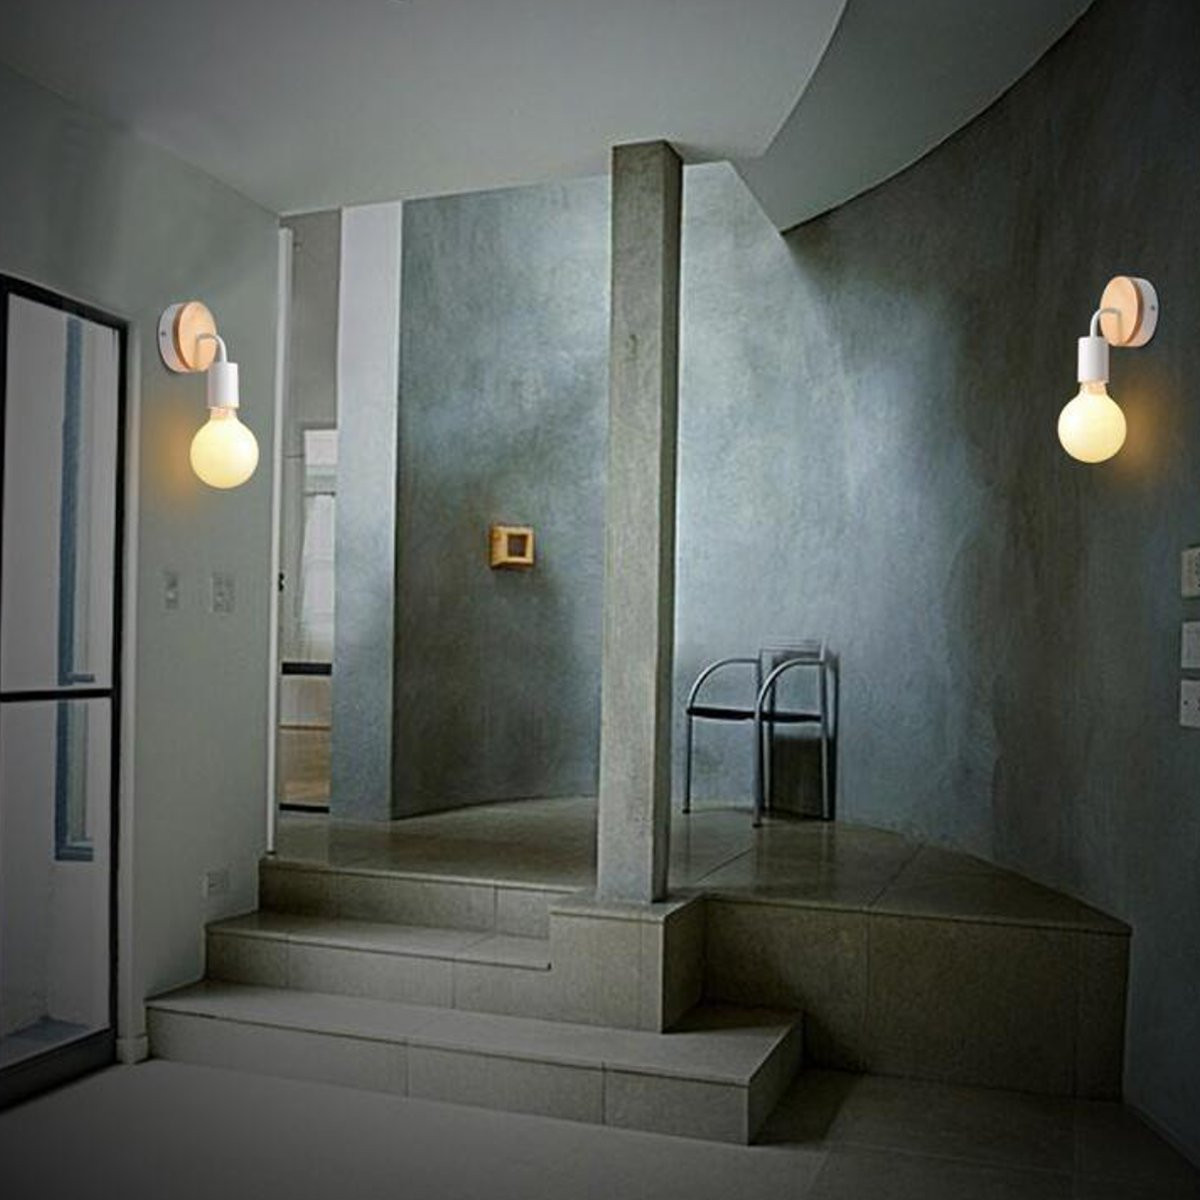 Modern-White-Black-E27-Wall-Lamp-Fixture-Sconce-Holder-Wood-Base-Cafe-Home-Decor-1115585-2